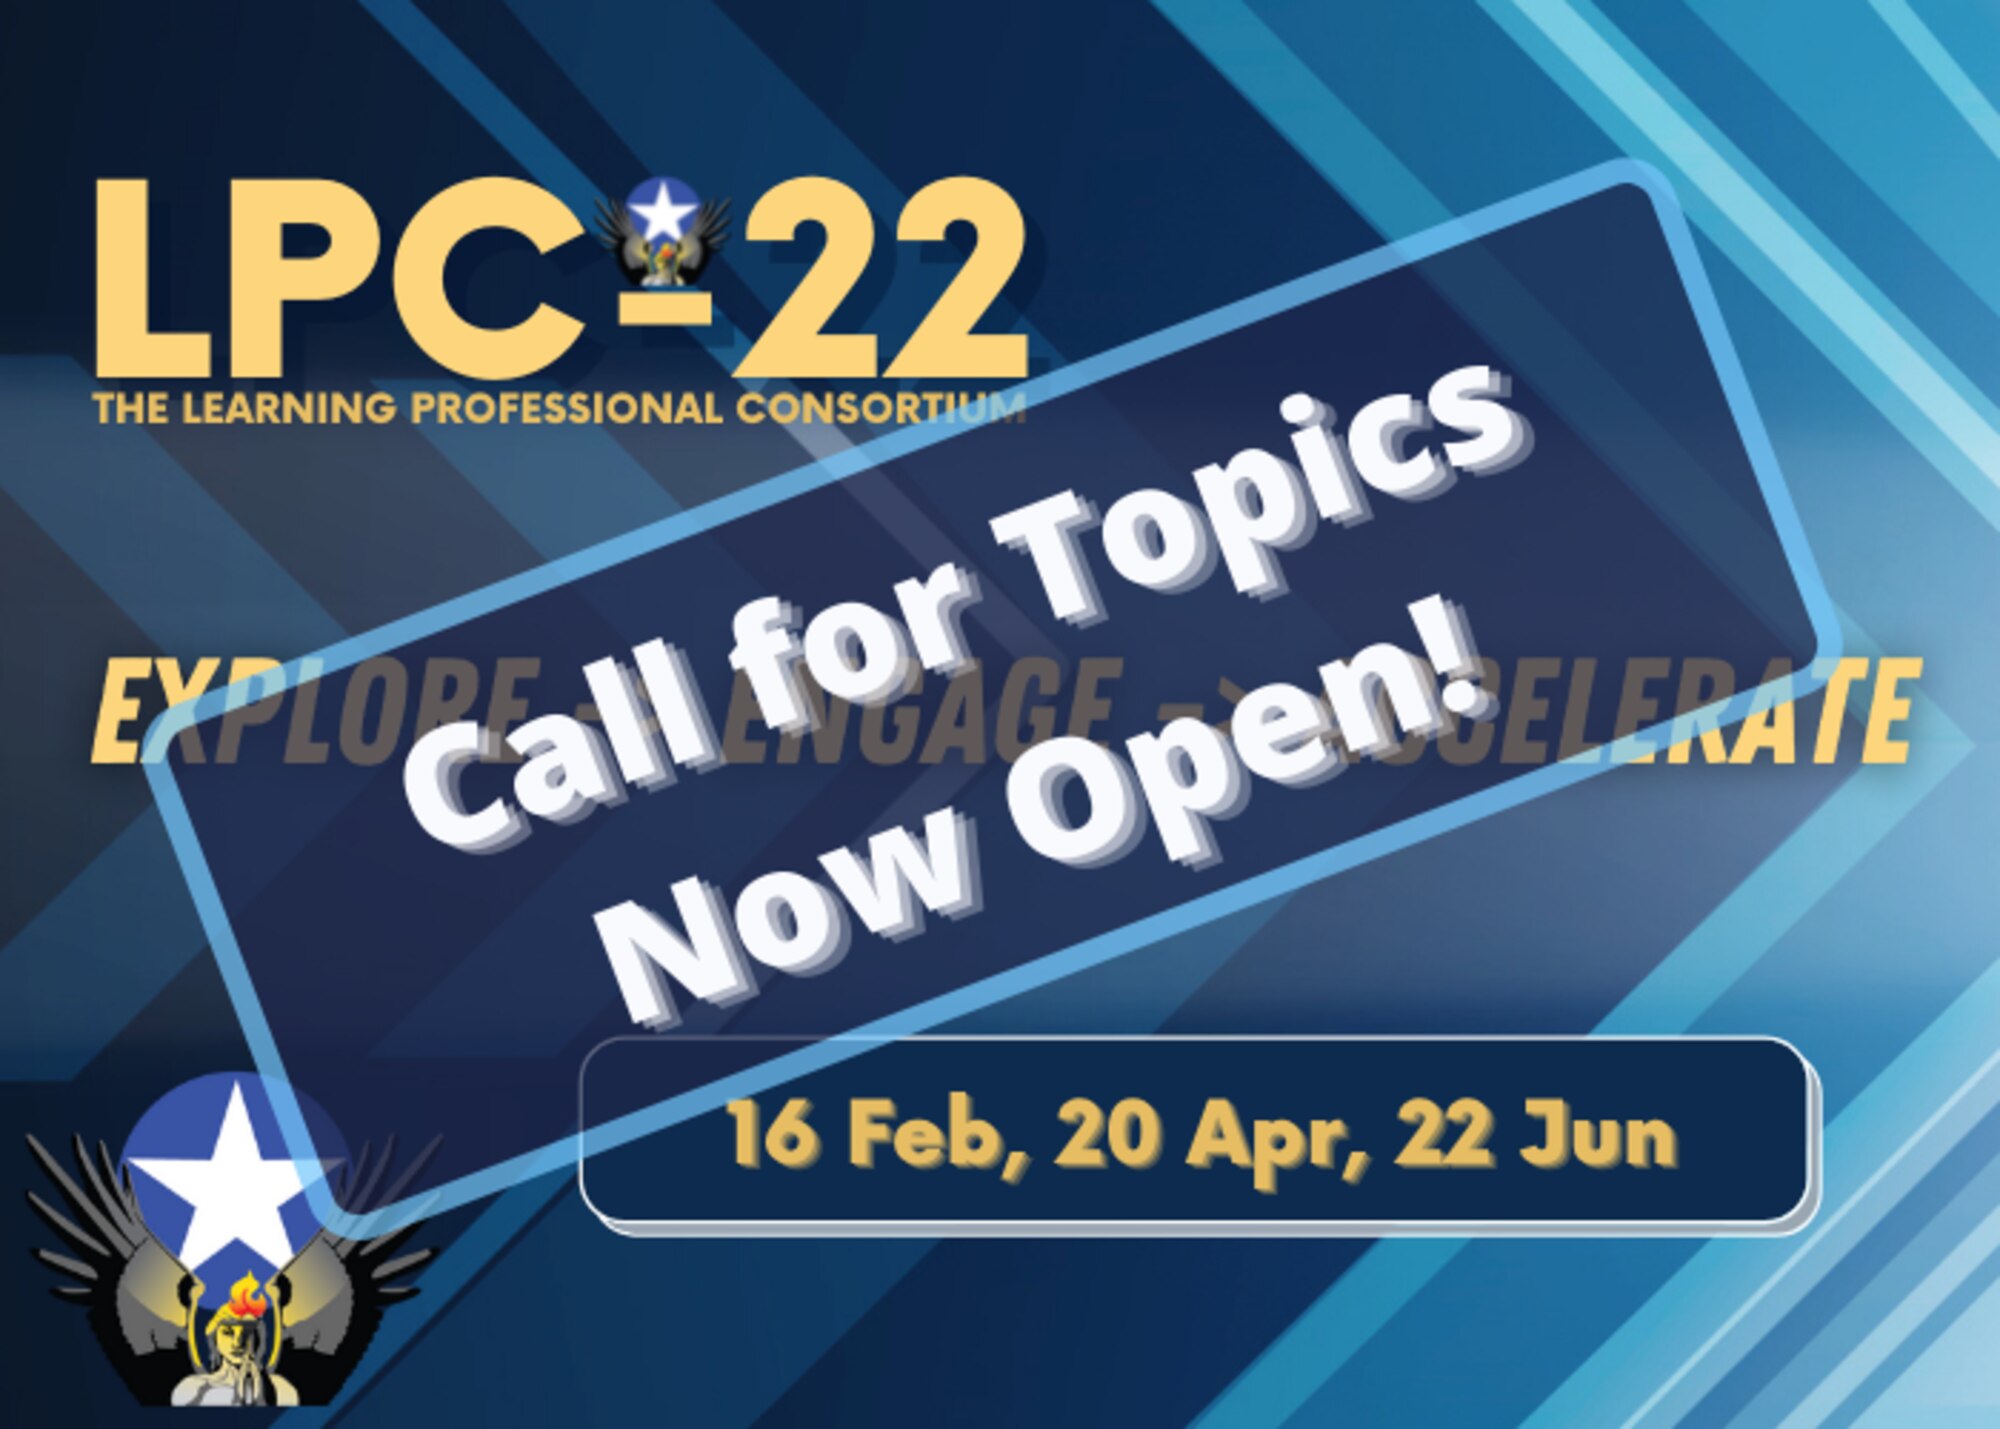 LPC-22 Call for Topics Now Open